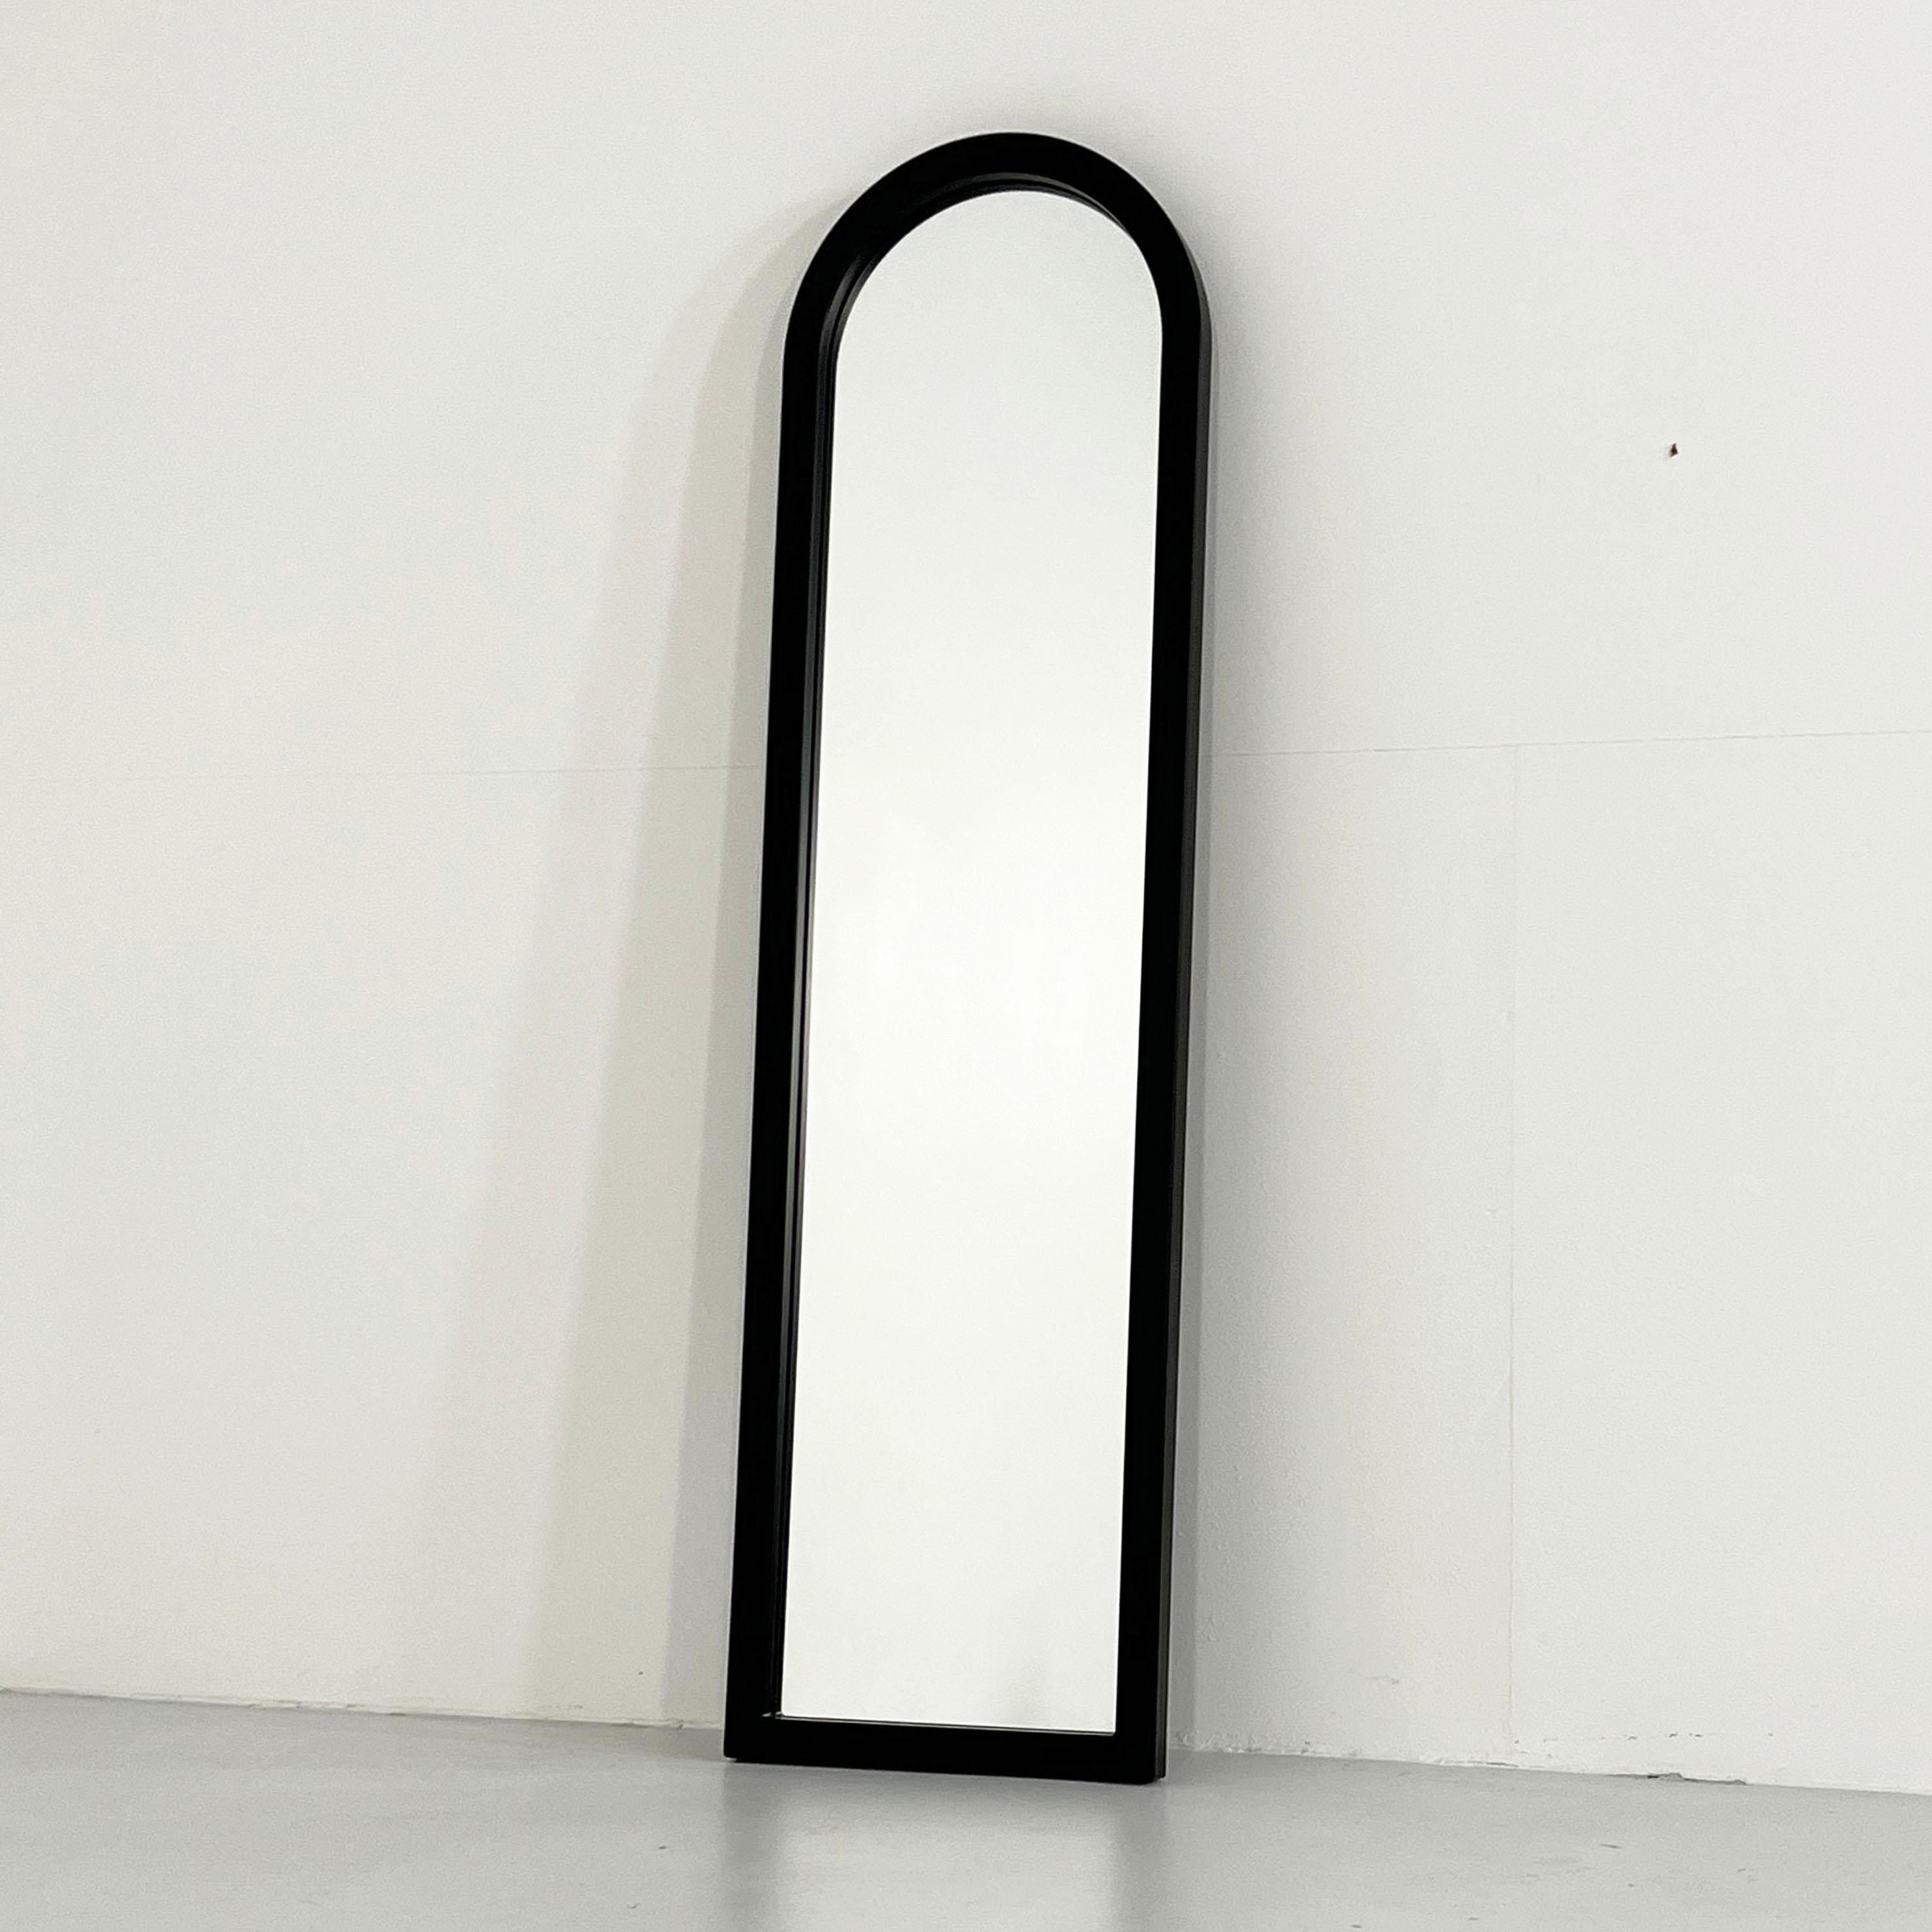 Black frame mirror by Anna Castelli Ferrieri for Kartell, 1980s
Designer - Anna Castelli Ferrieri
Producer - Kartell
Design Period - Eighties
Measurements - width 30 cm x depth 4 cm x height 110 cm
Materials - expanded polyurethane,